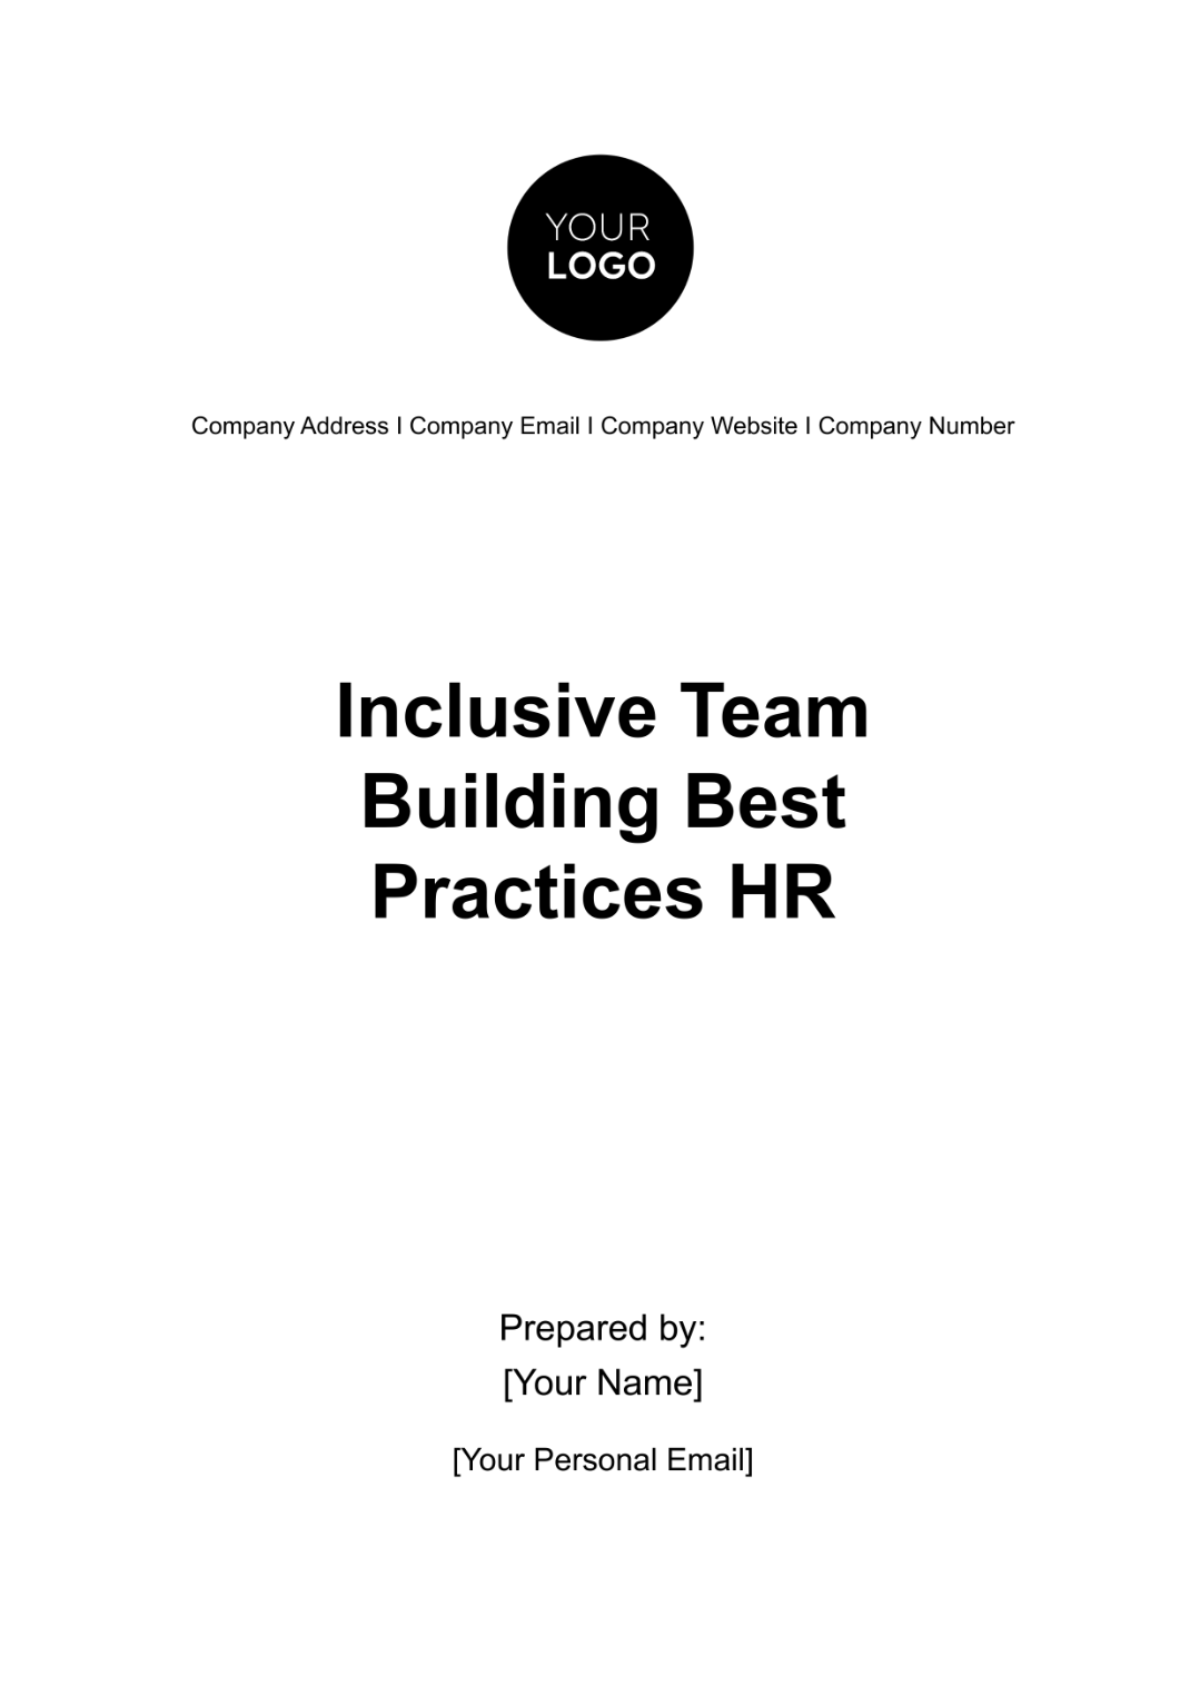 Inclusive Team Building Best Practices HR Template